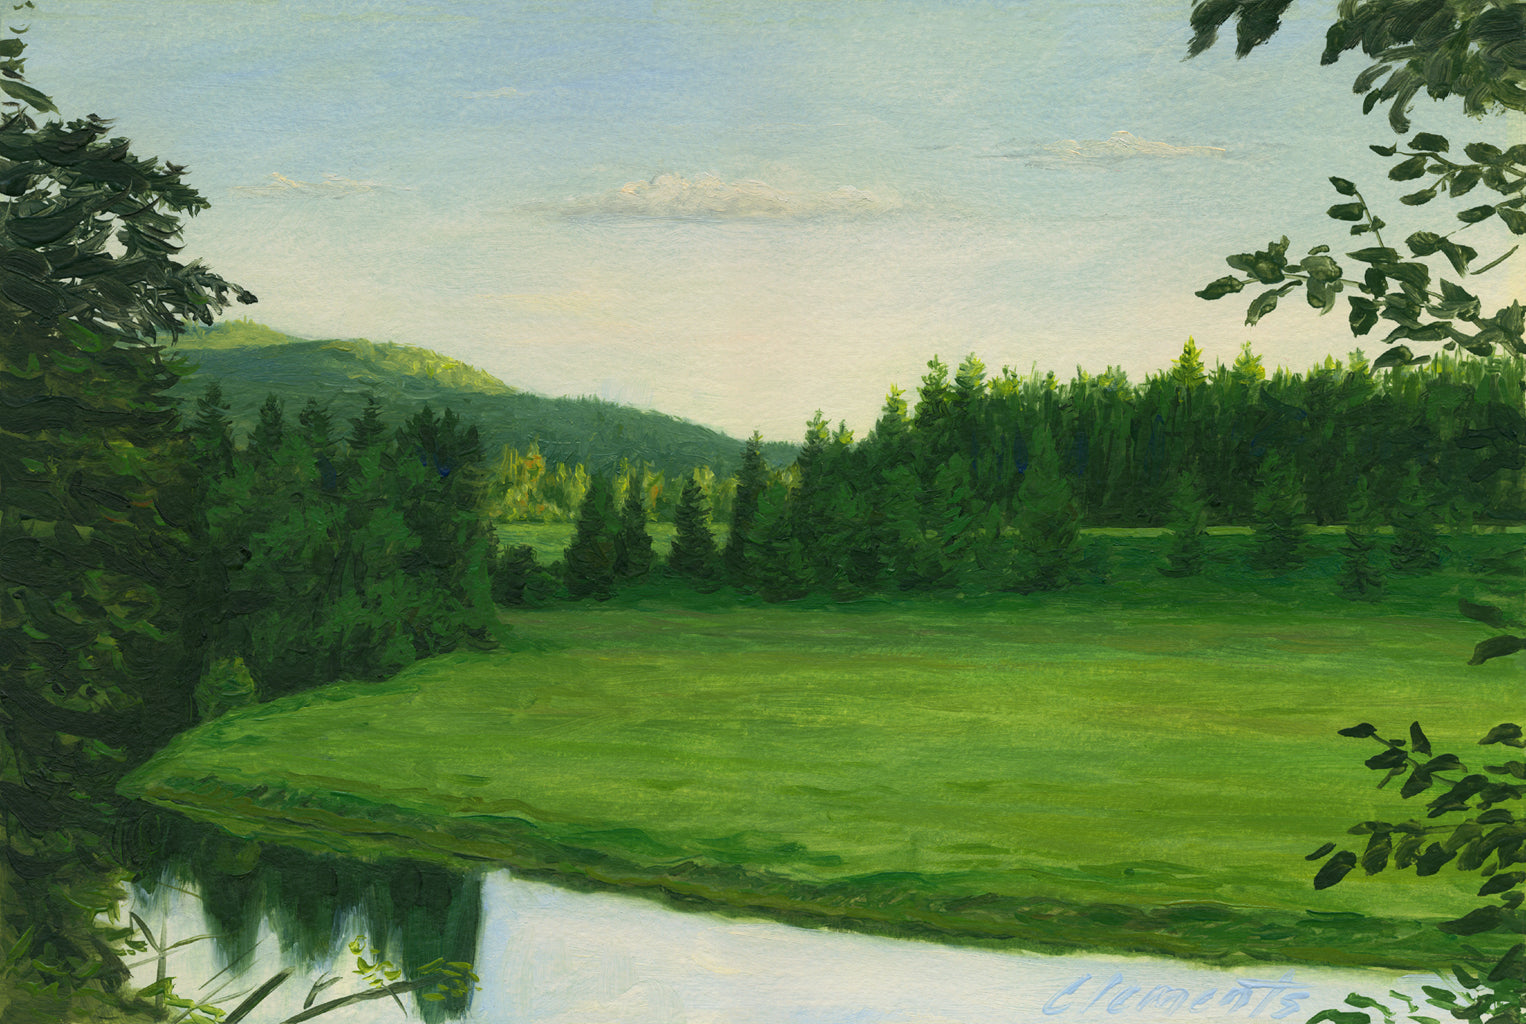 Pend Oreille River Sunset Painting Giclée Print